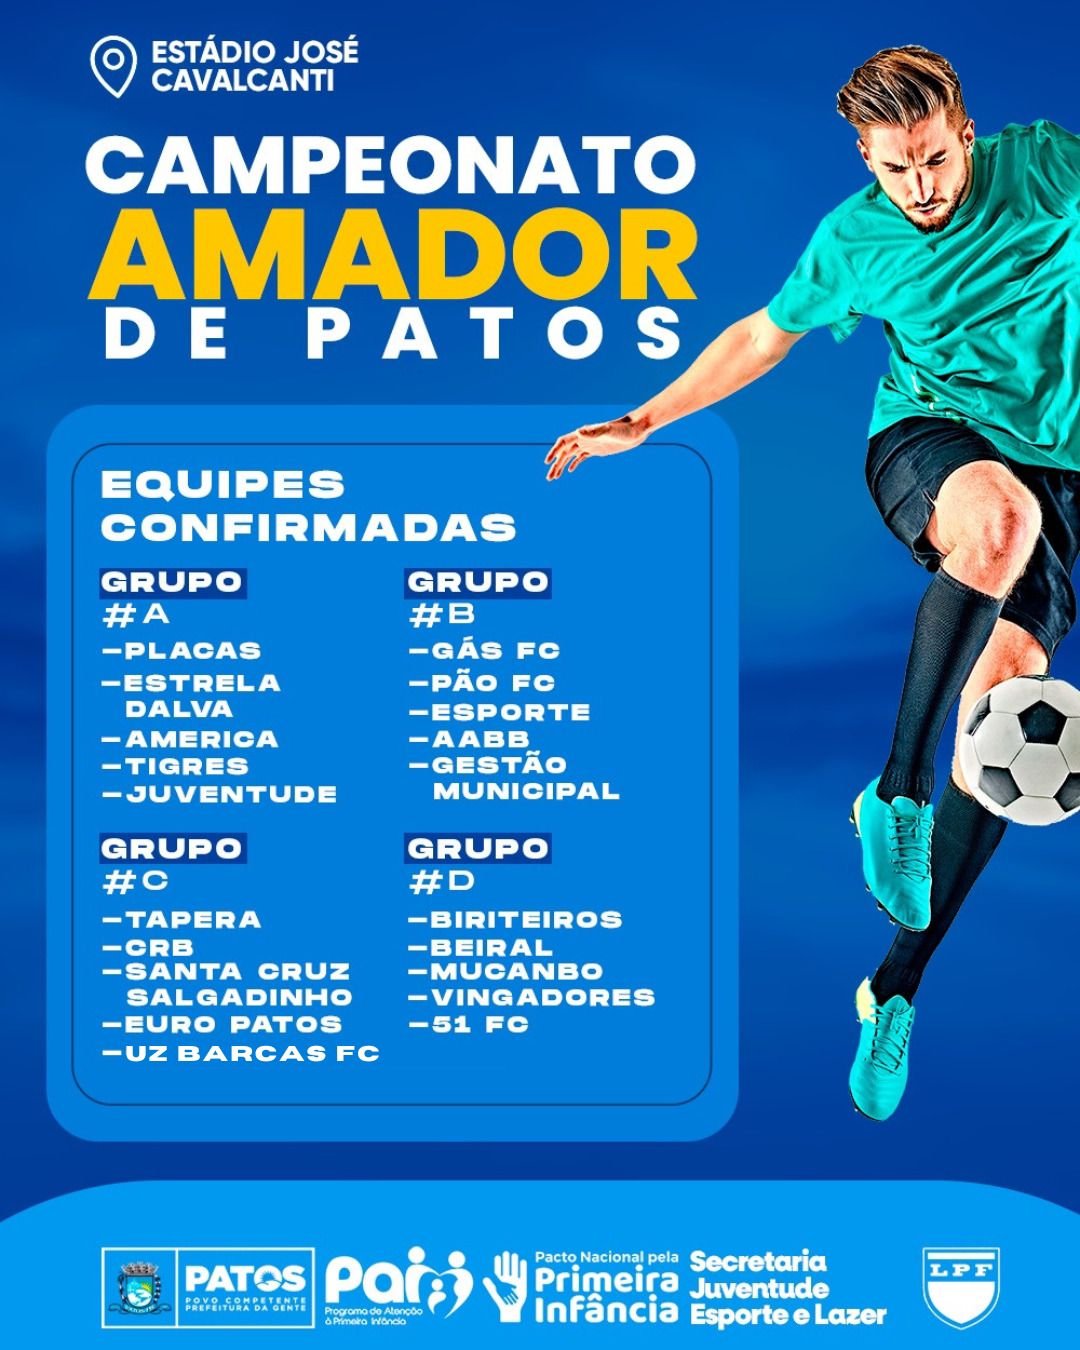 Campeonato Amador de Futebol de Patos inicia nesta terça (14), às 18h, no José Cavalcanti